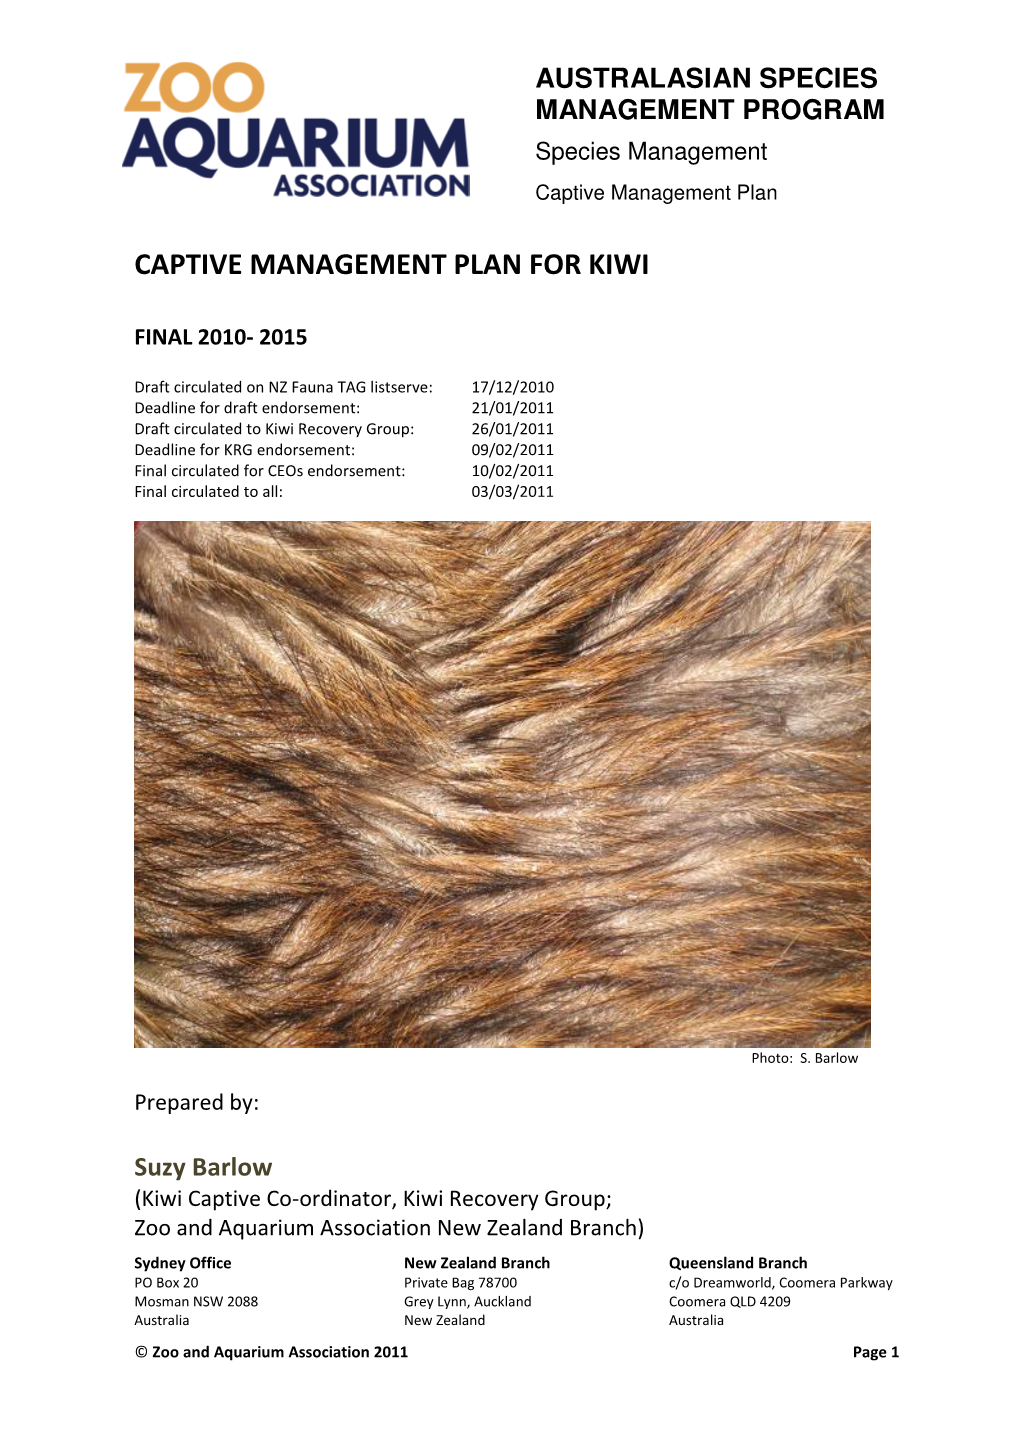 Captive Management Plan for Kiwi 2010